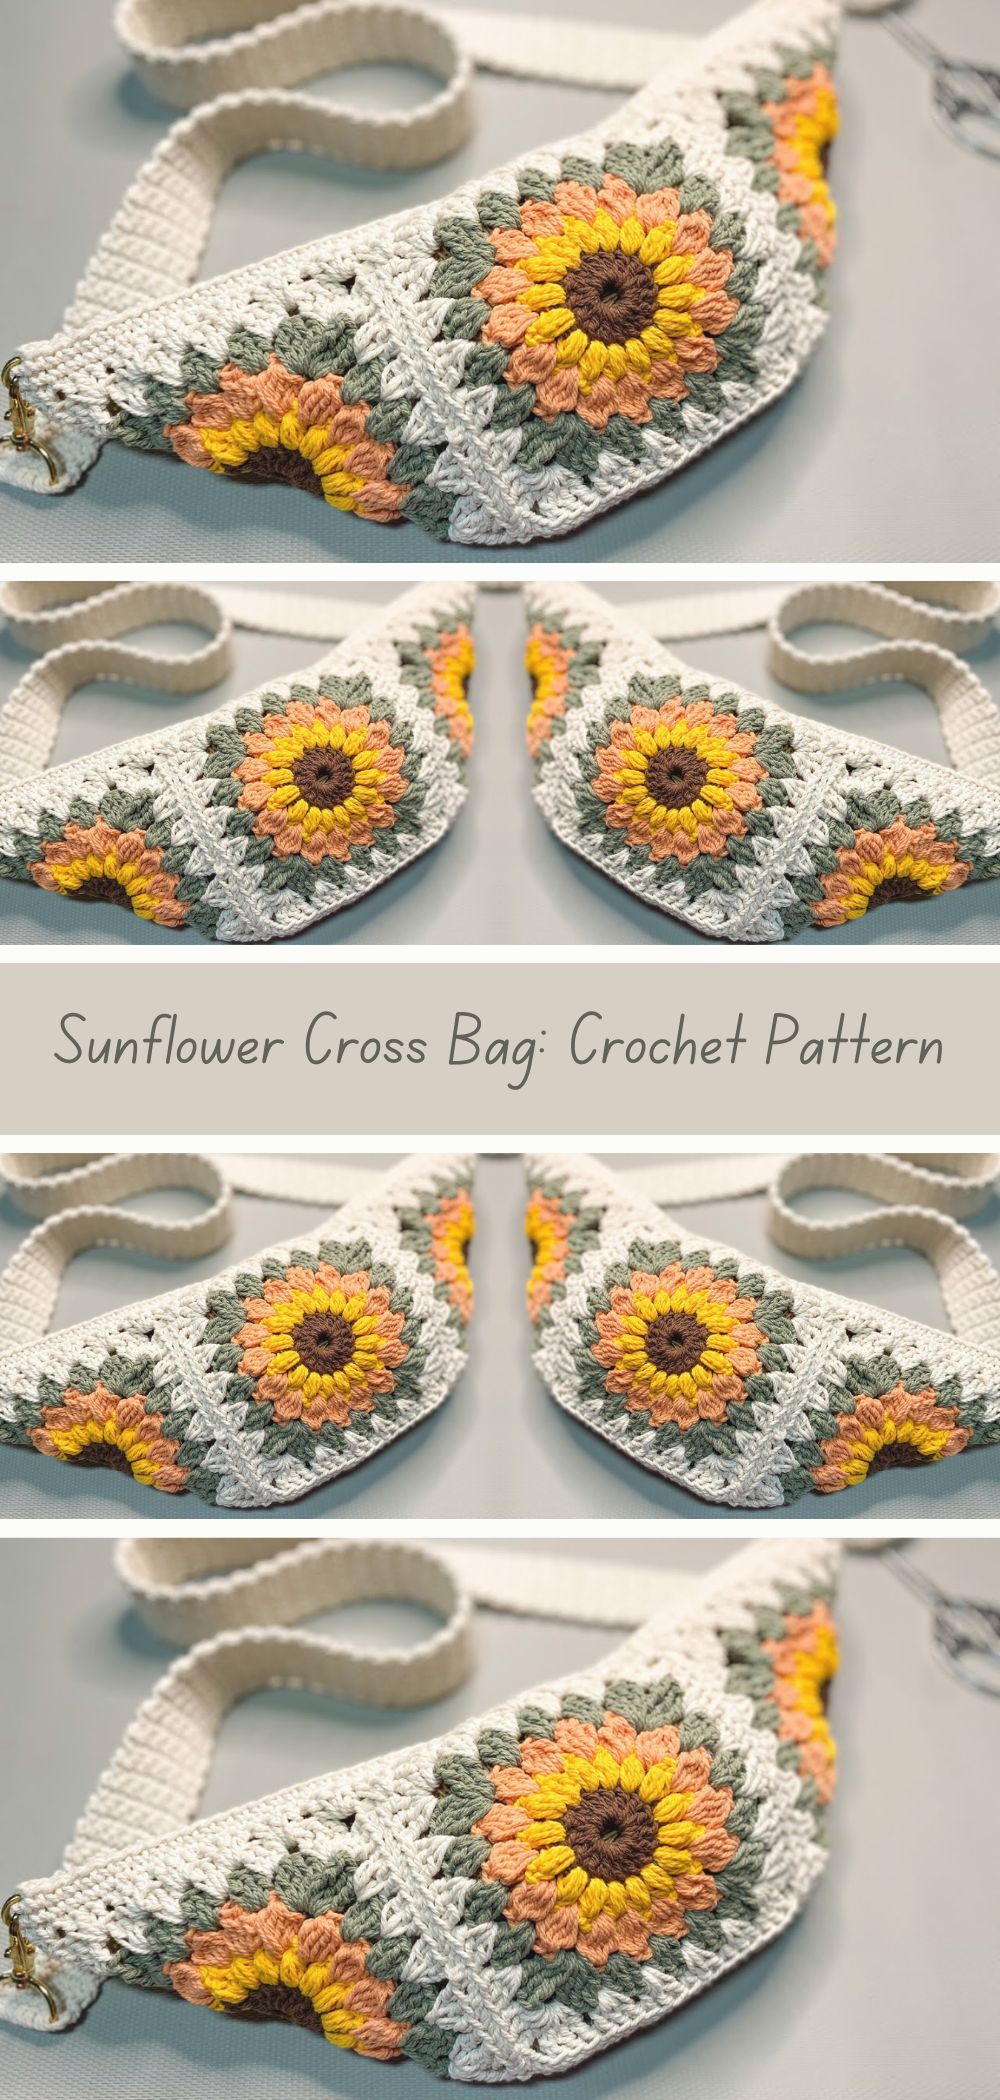 Sunflower Cross Bag Crochet Pattern - Create a stylish crossbody bag adorned with sunflower motifs with this delightful crochet pattern